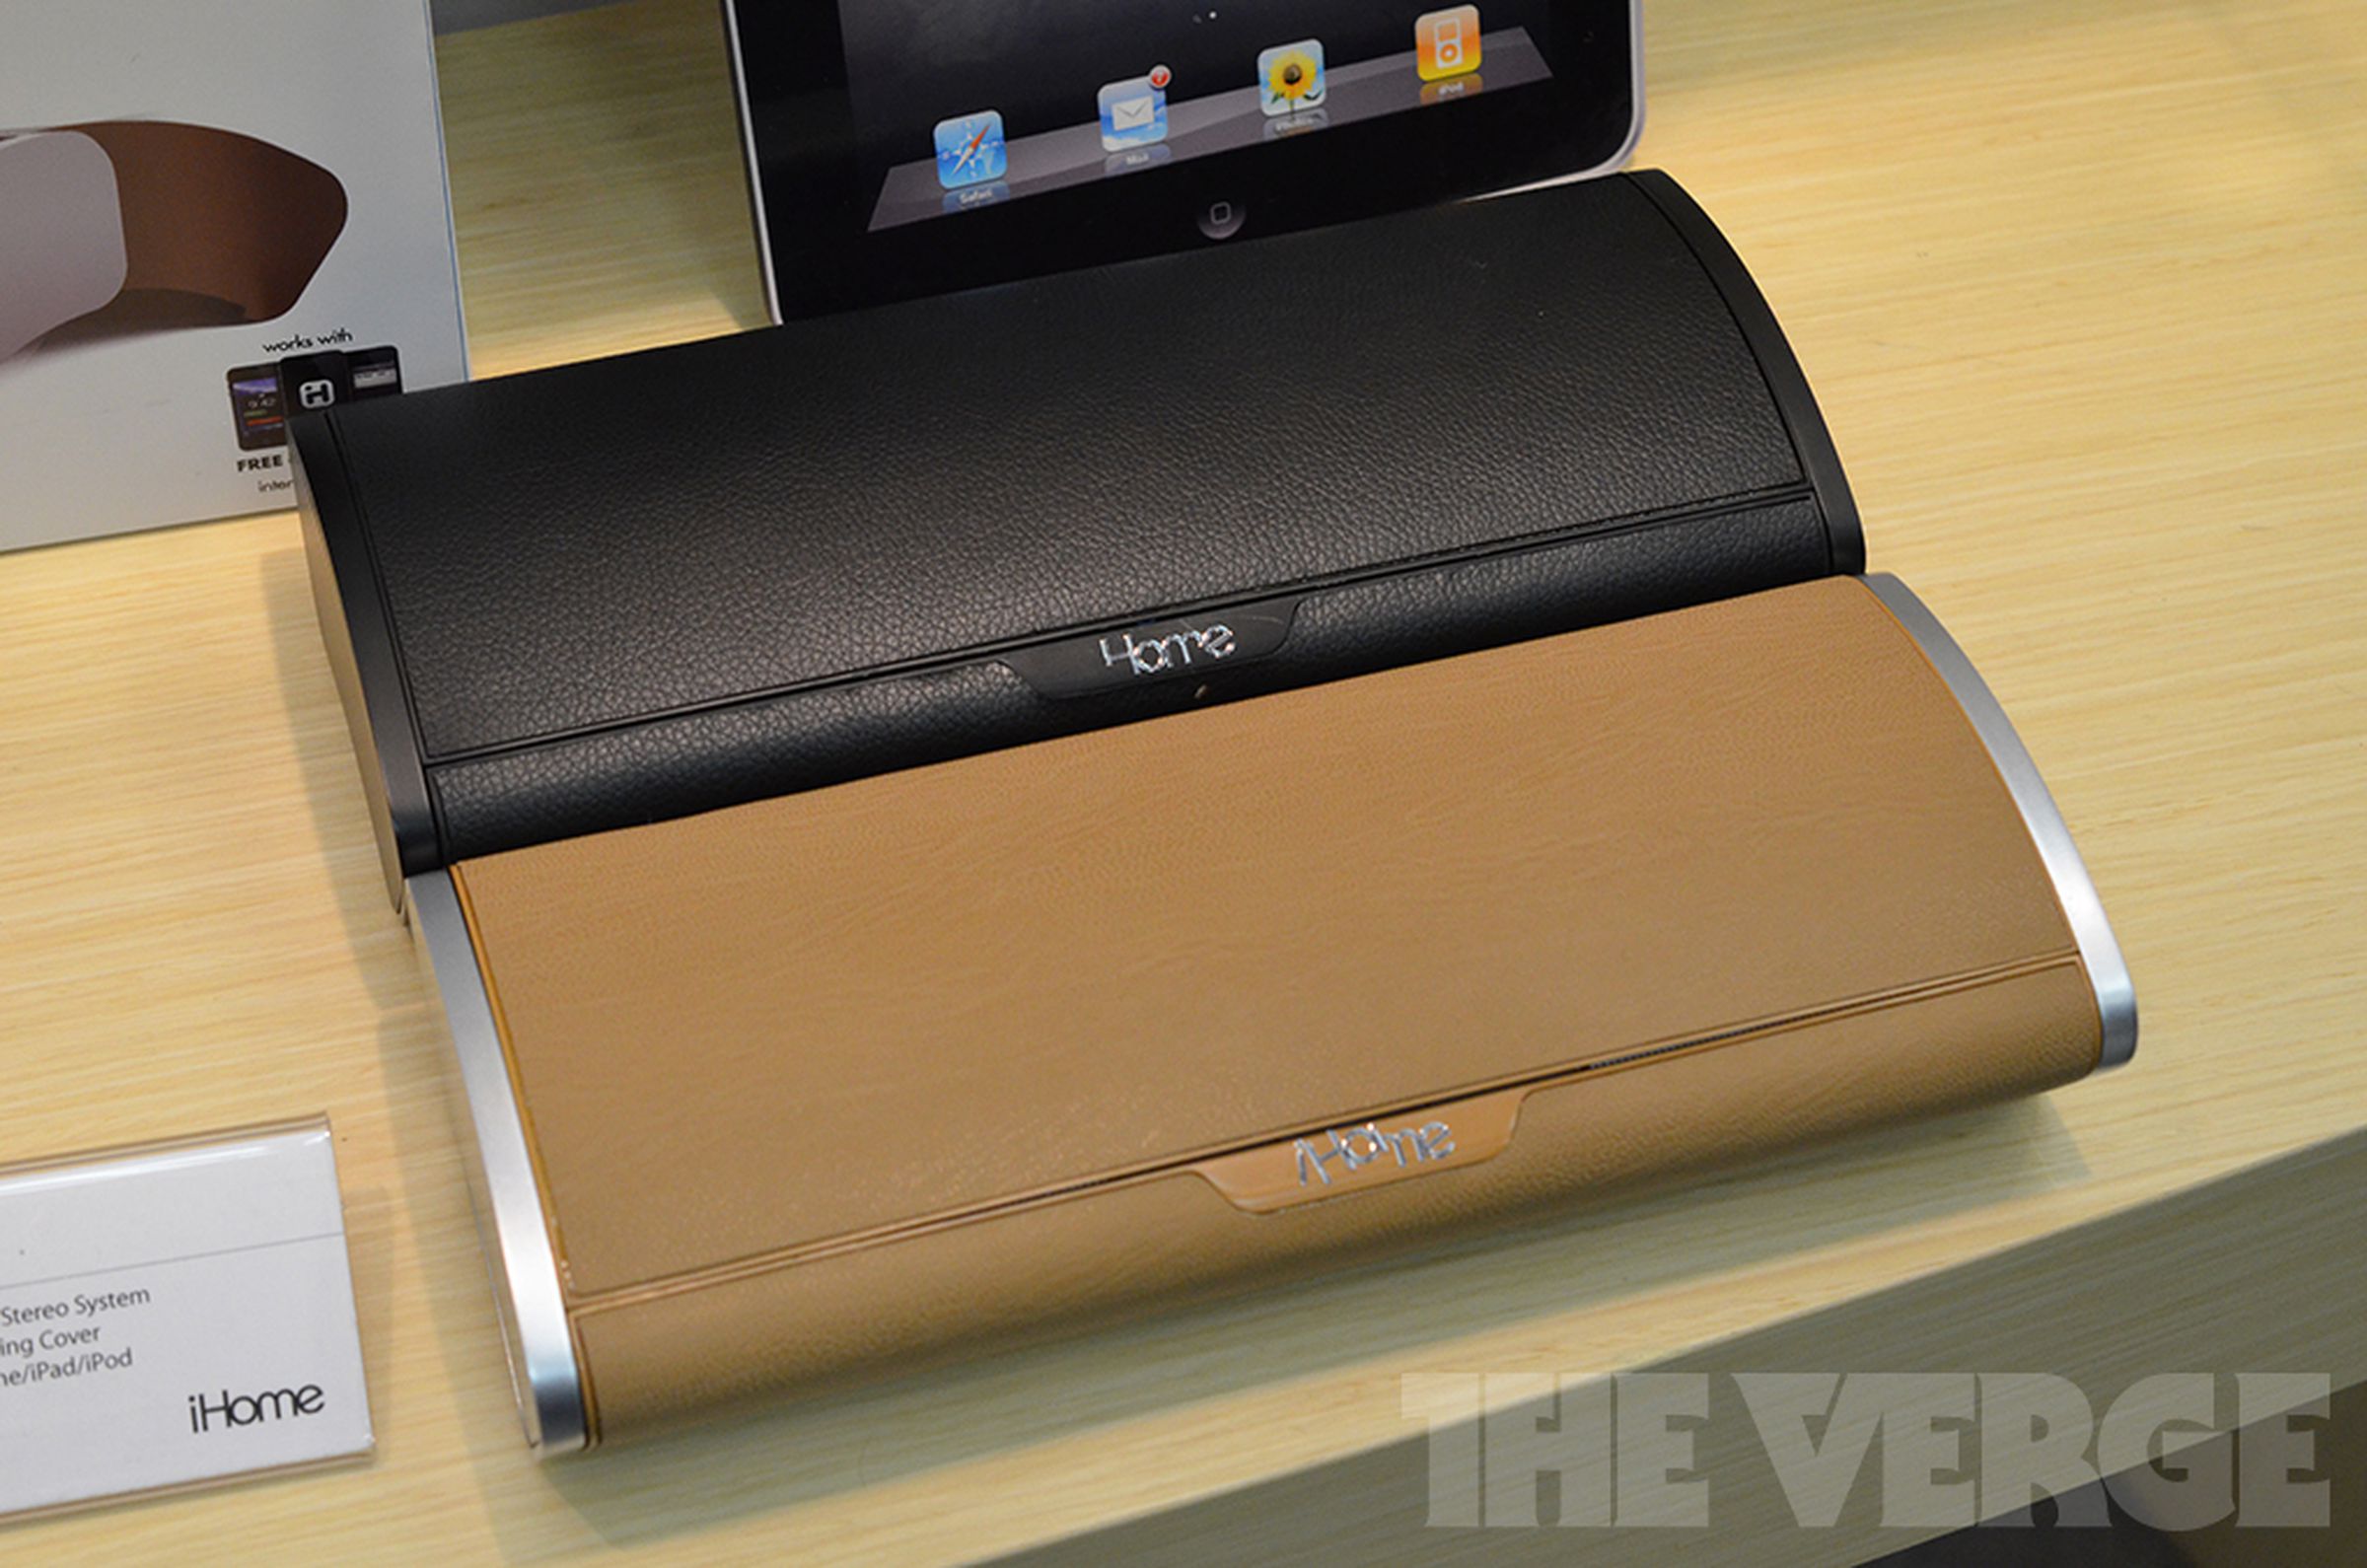 iHome iD55 iPad and iPhone speaker dock (hands-on photos)